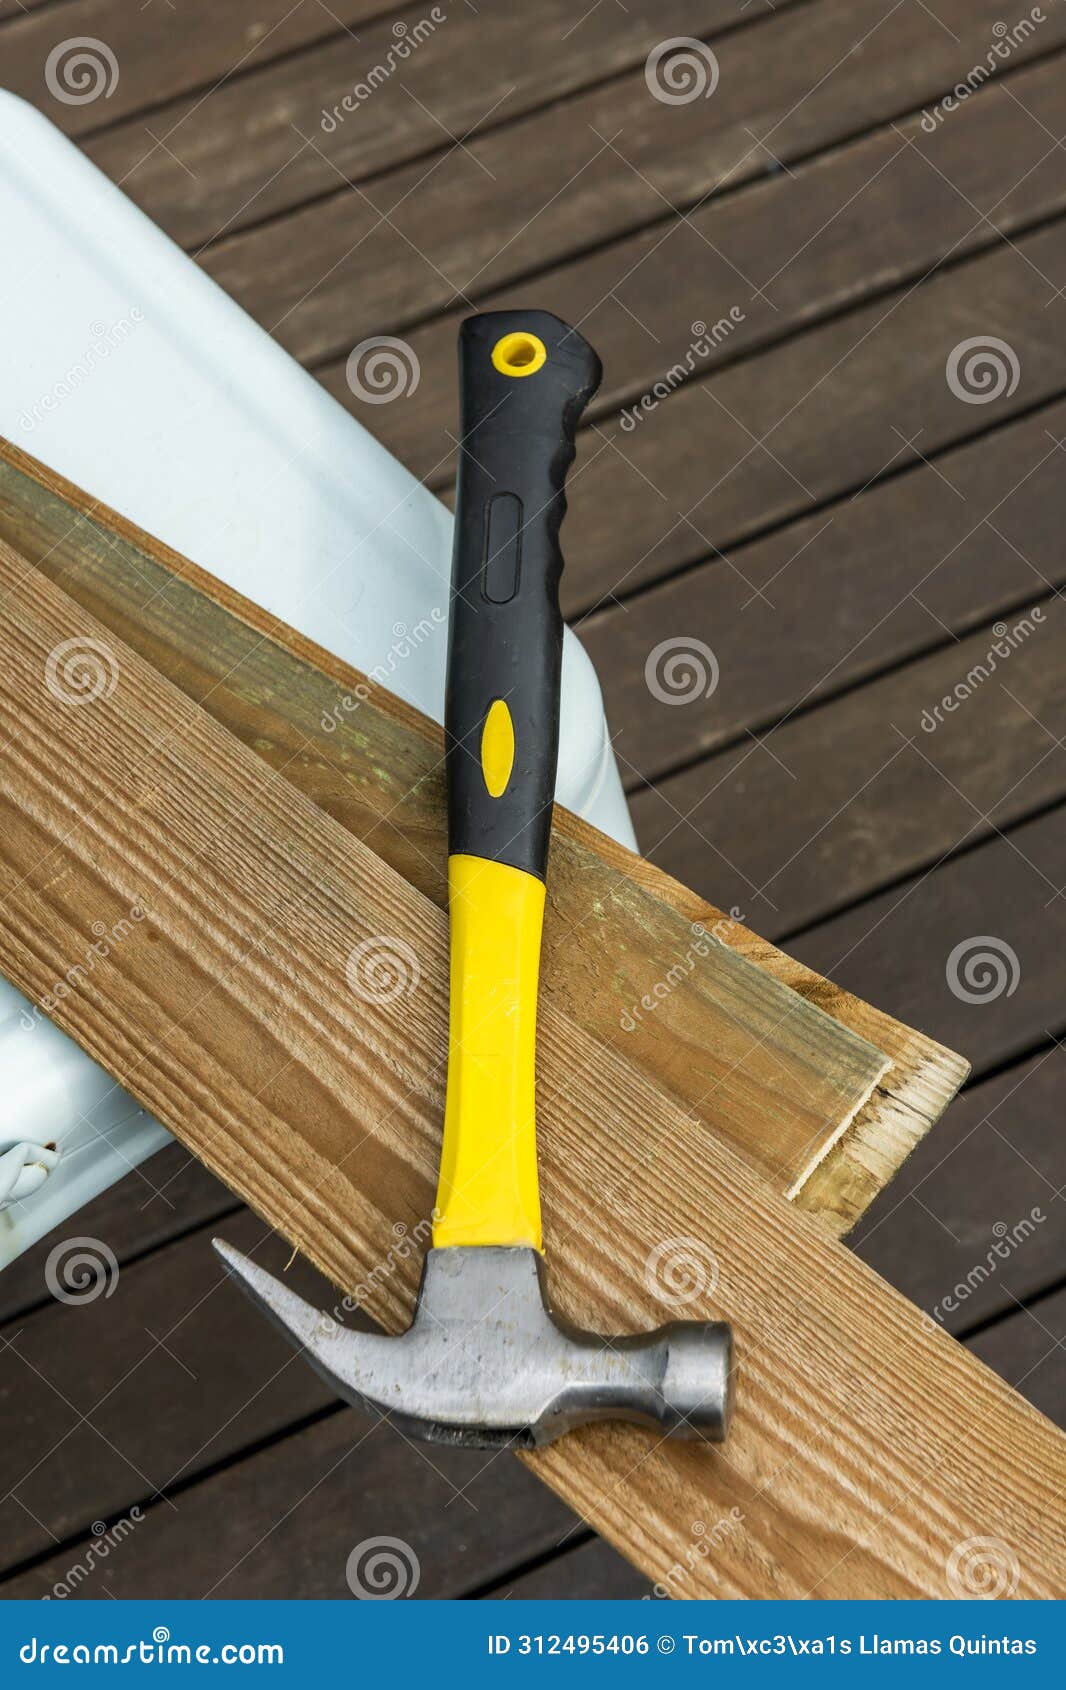 un martillo metÃÂ¡lico con mango de madera amarilla y negra sobre unos tablones de madera